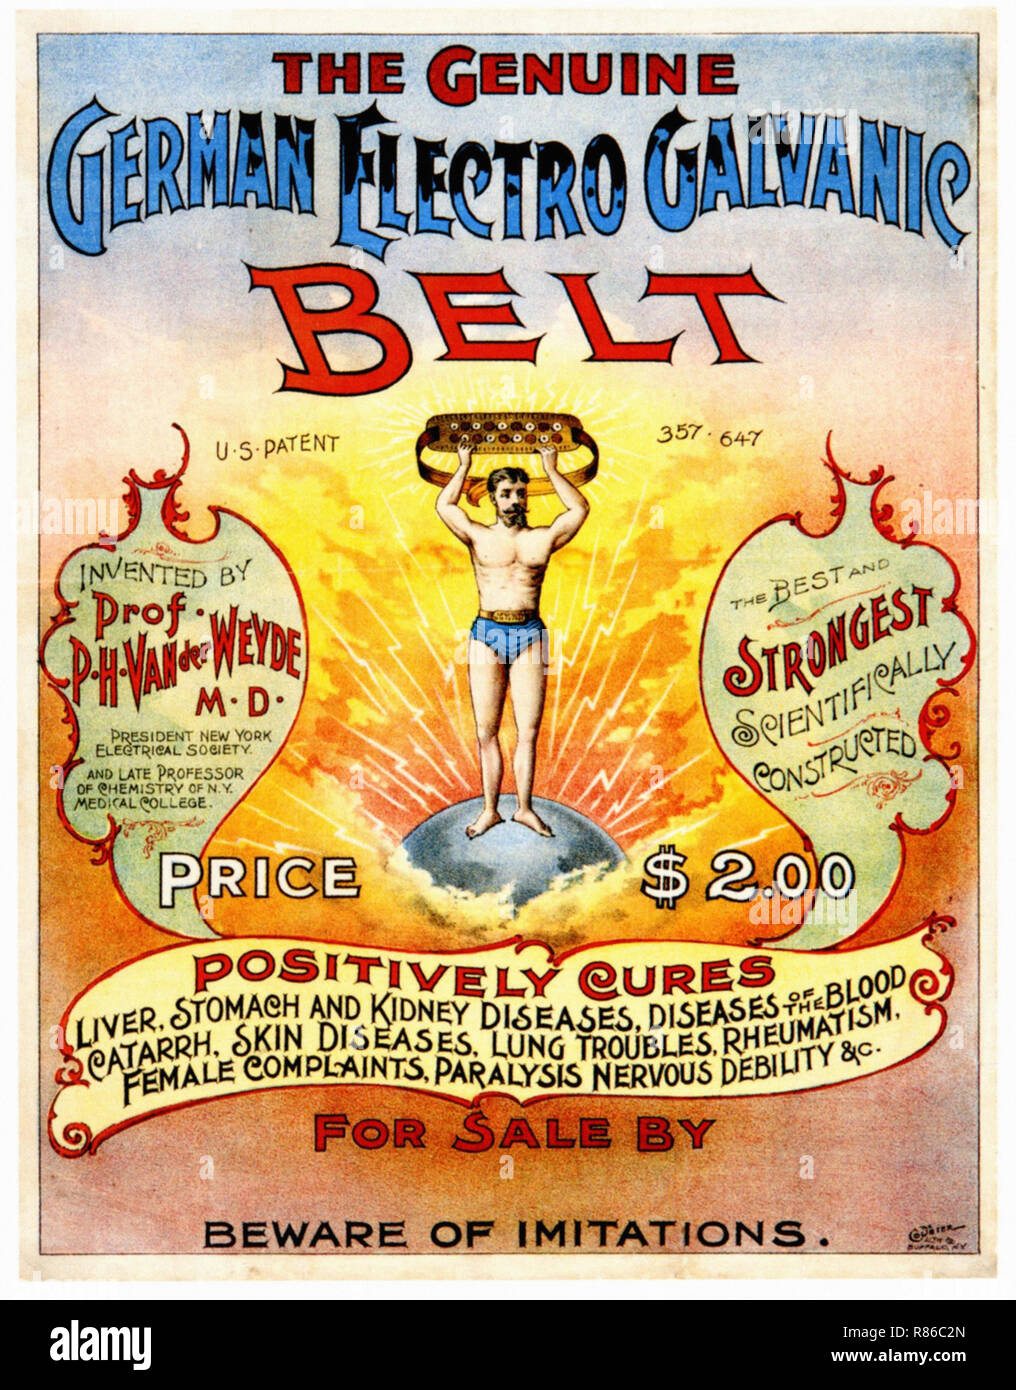 The Genuine Germano Electro Galvanic Belt - Vintage advertising poster Stock Photo